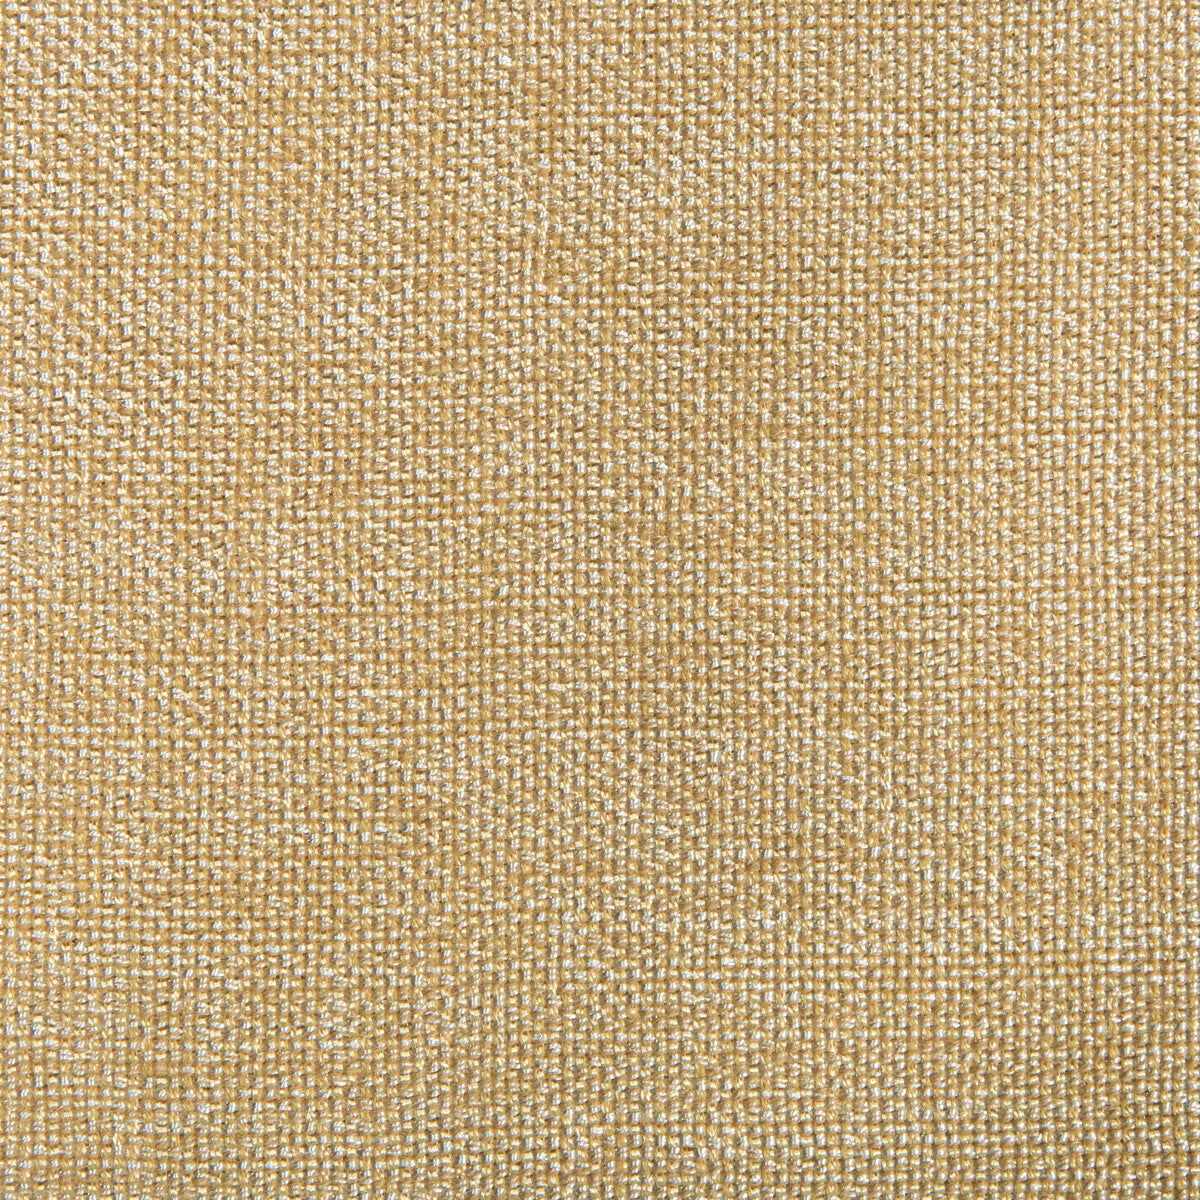 Kravet Smart fabric in 34939-116 color - pattern 34939.116.0 - by Kravet Smart